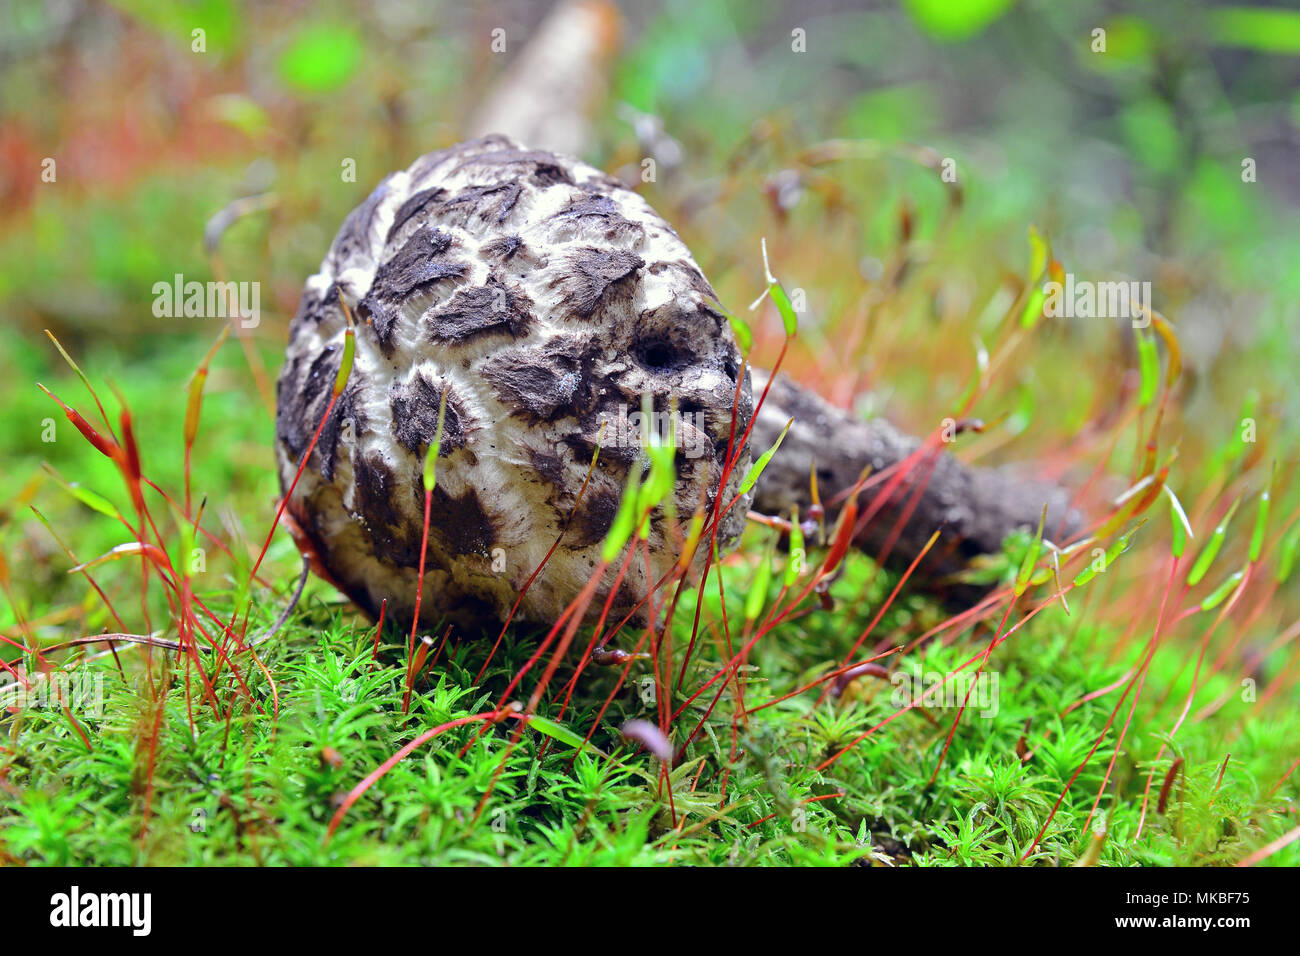 stromilomyces strobilaceus mushroom in the forest Stock Photo